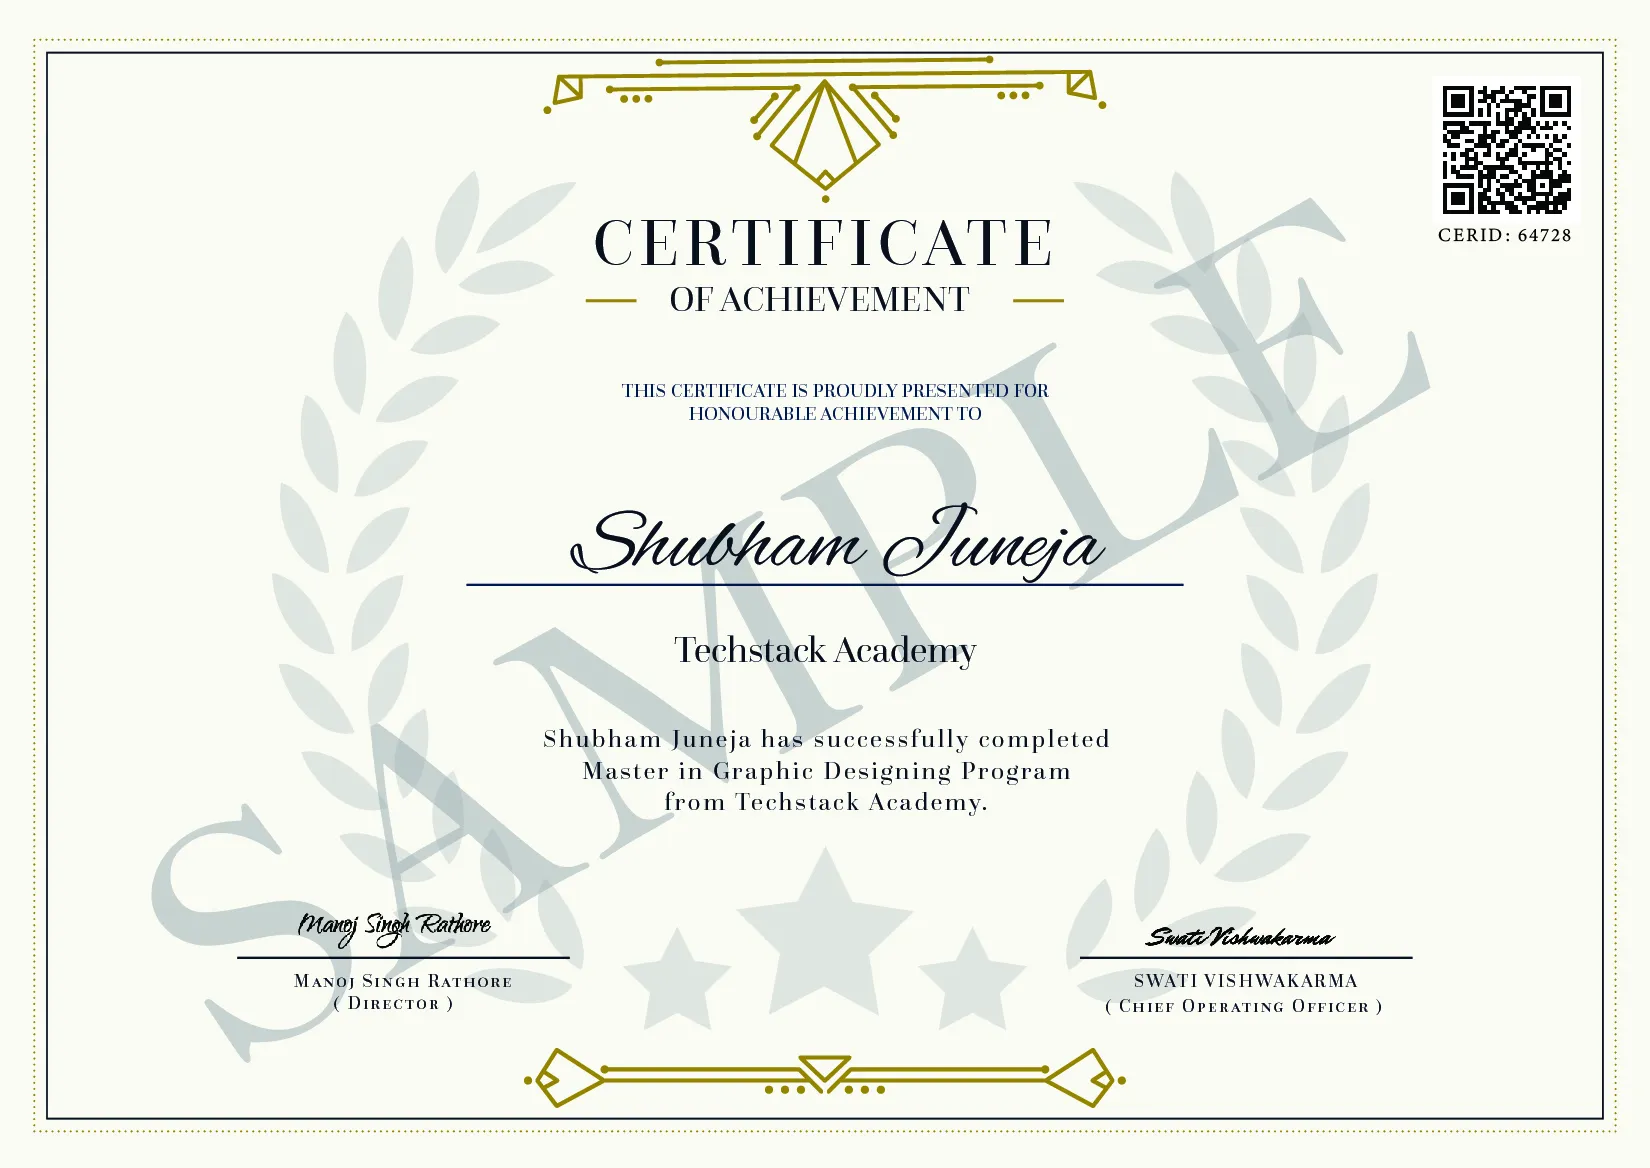 Master in Graphic Designing Training Certificate